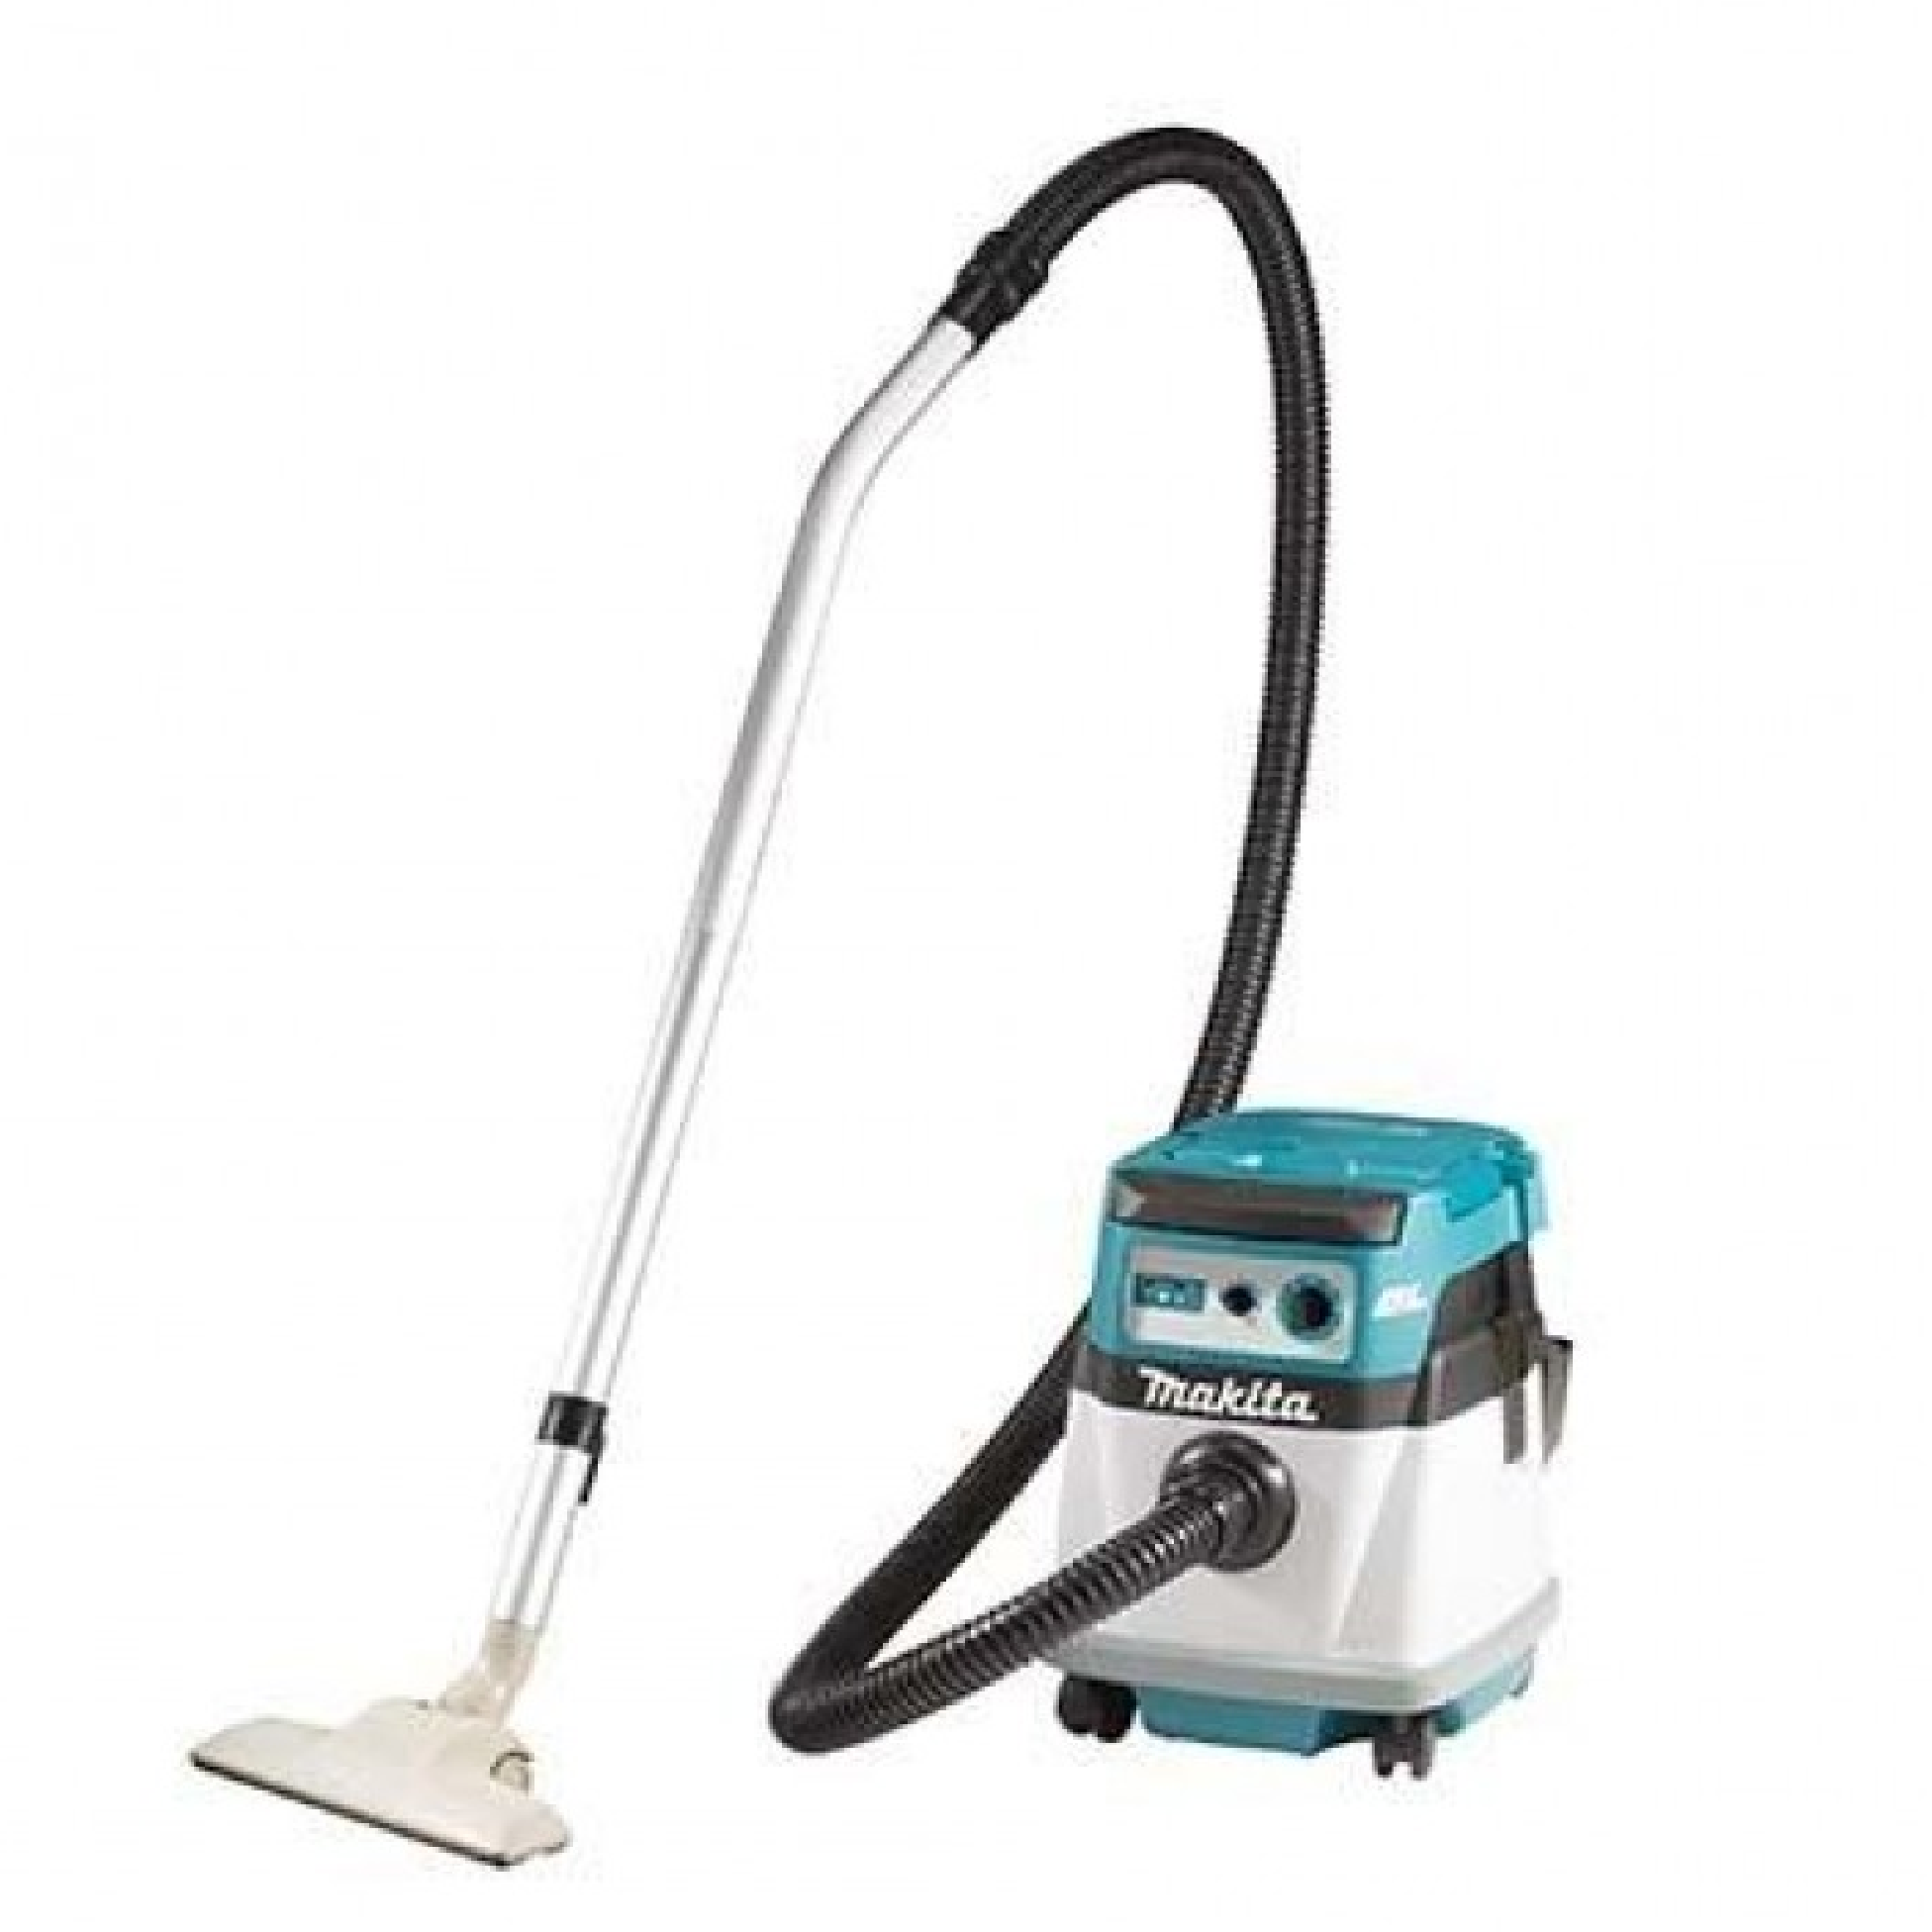 Makita DVC860LZ 36V (18V+18V) LI-ION WET & DRY Cordless Vacuum Cleaner With Floor Cleaning Set